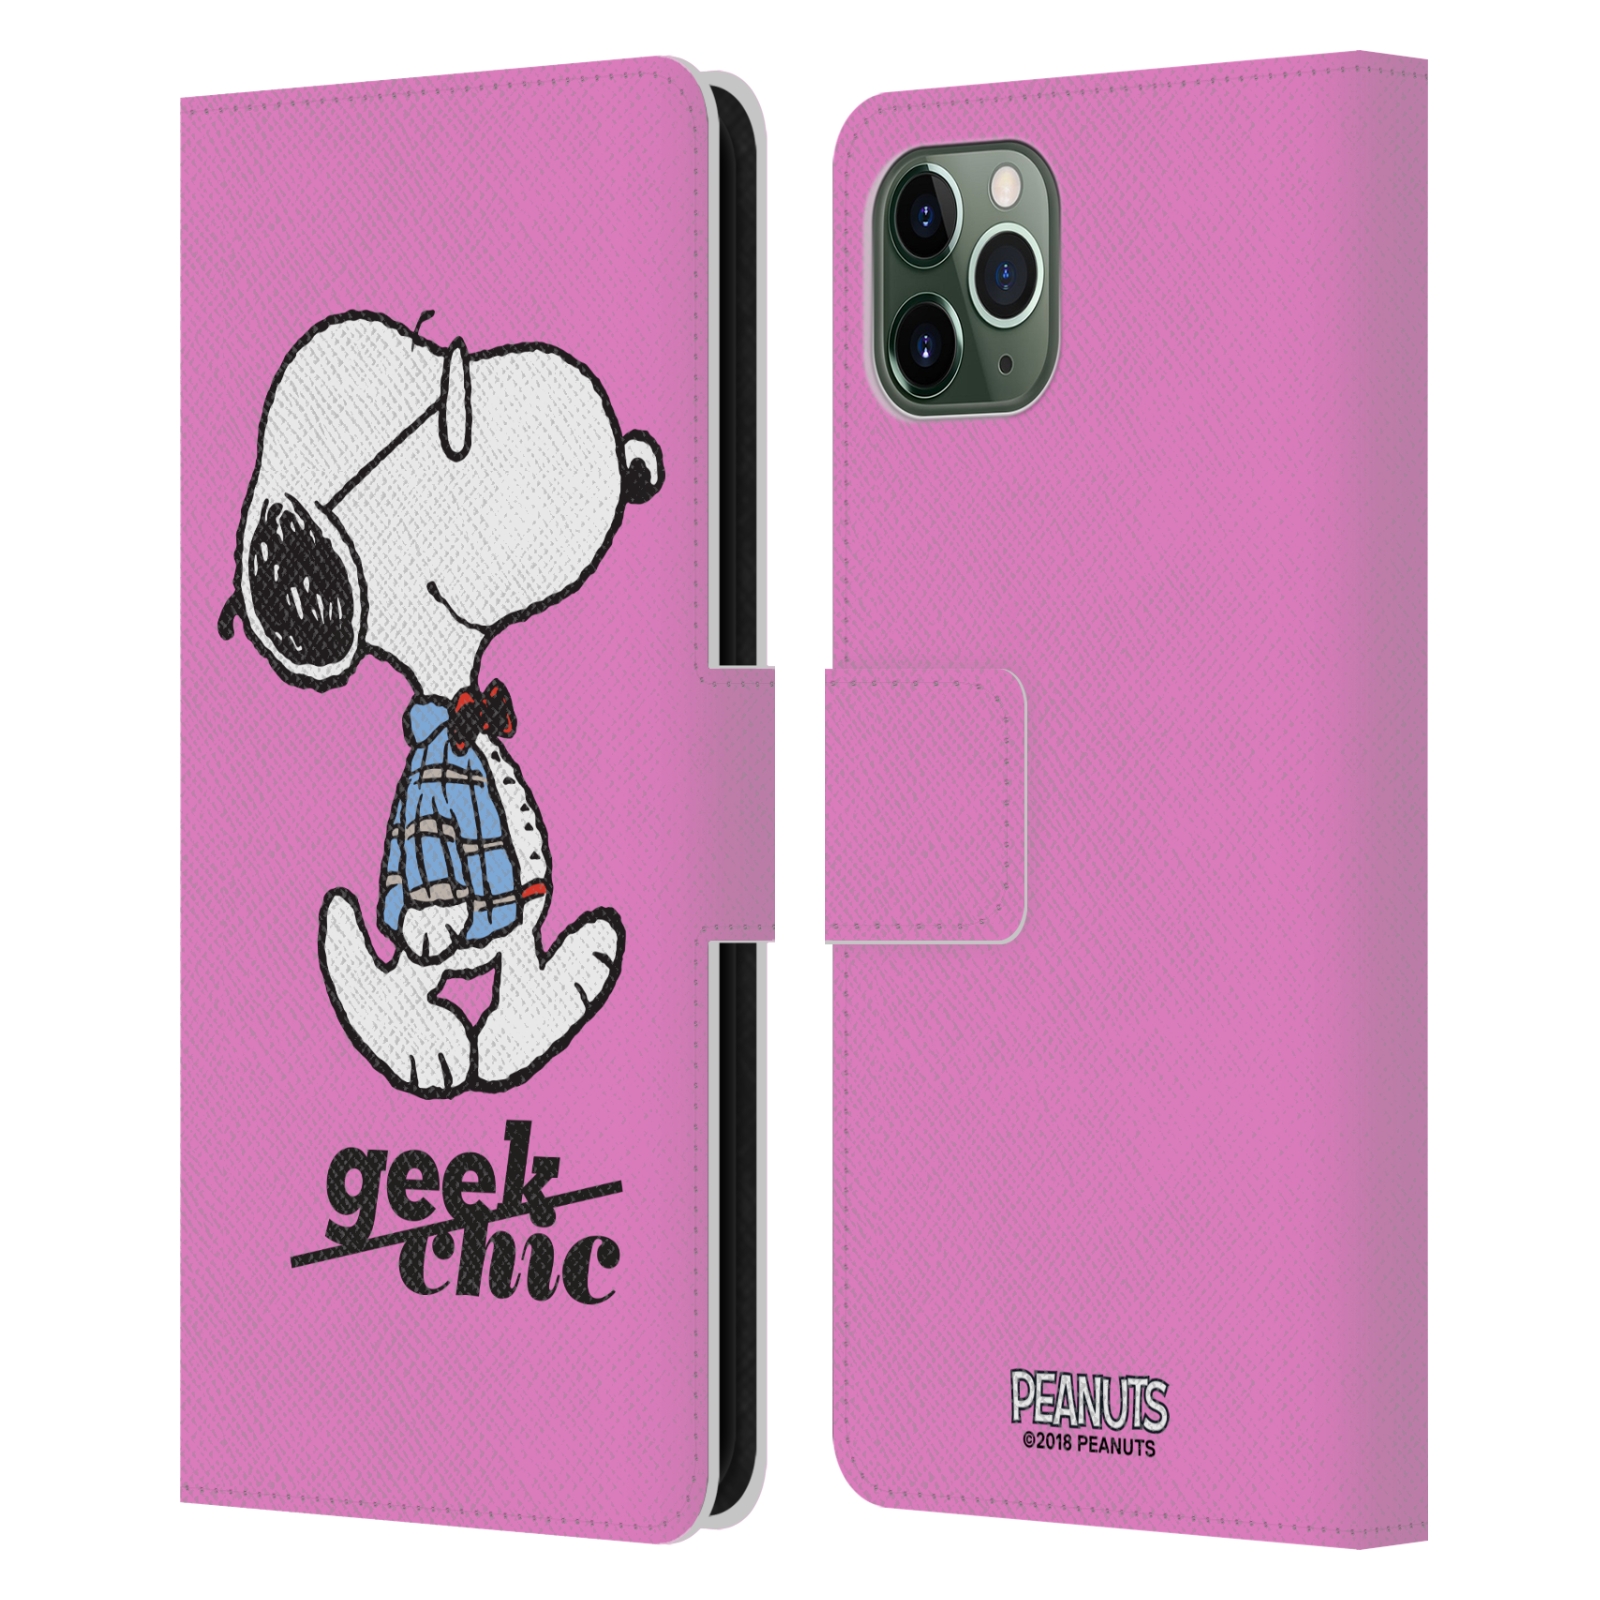 Pouzdro na mobil Apple Iphone 11 PRO MAX - Head Case - Peanuts - růžový pejsek snoopy nerd